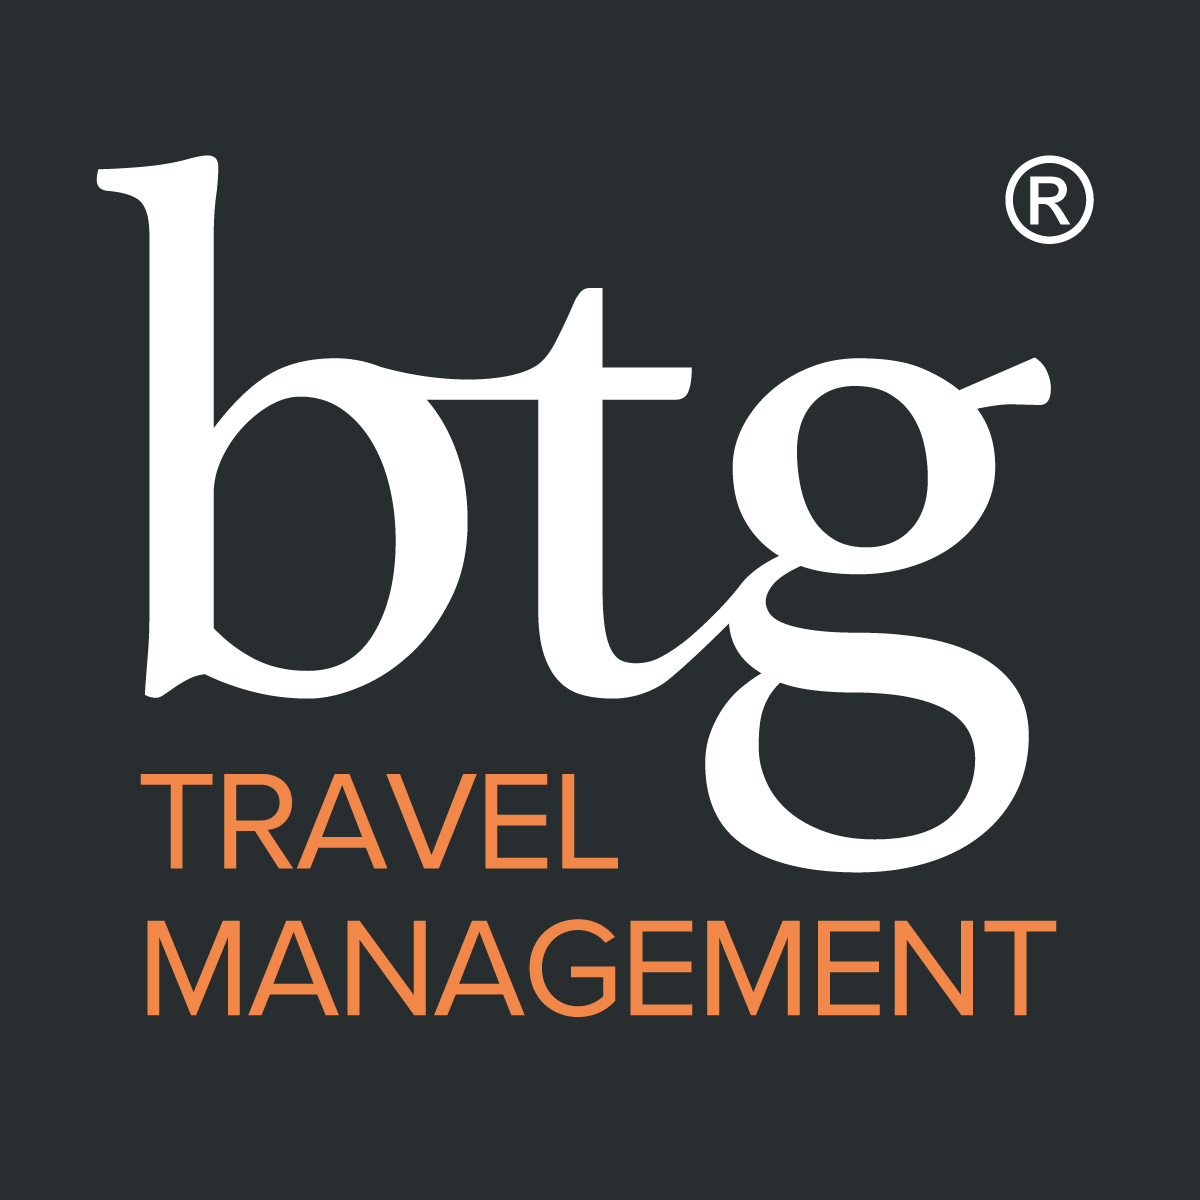 BTG Travel Management